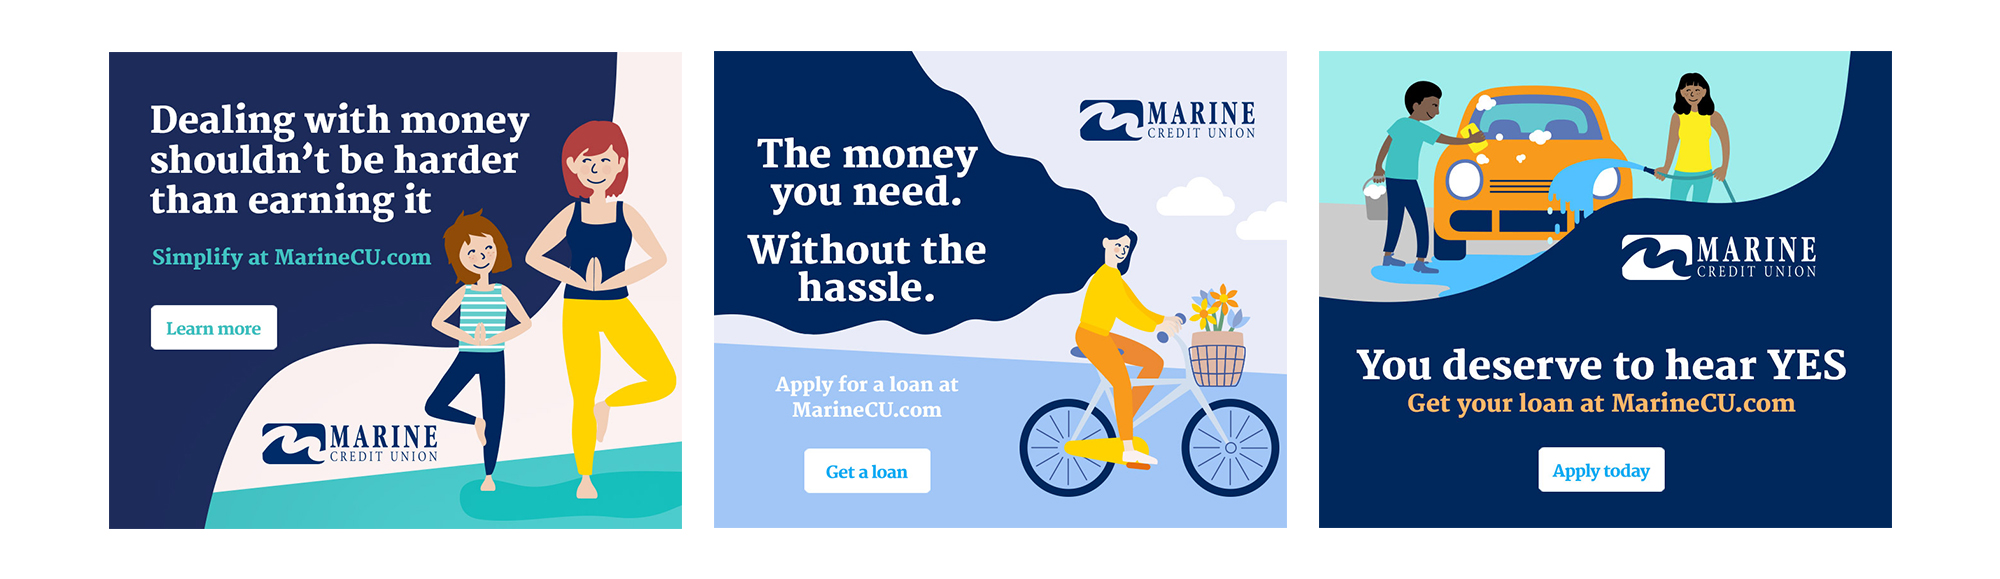 Marine Credit Union digital